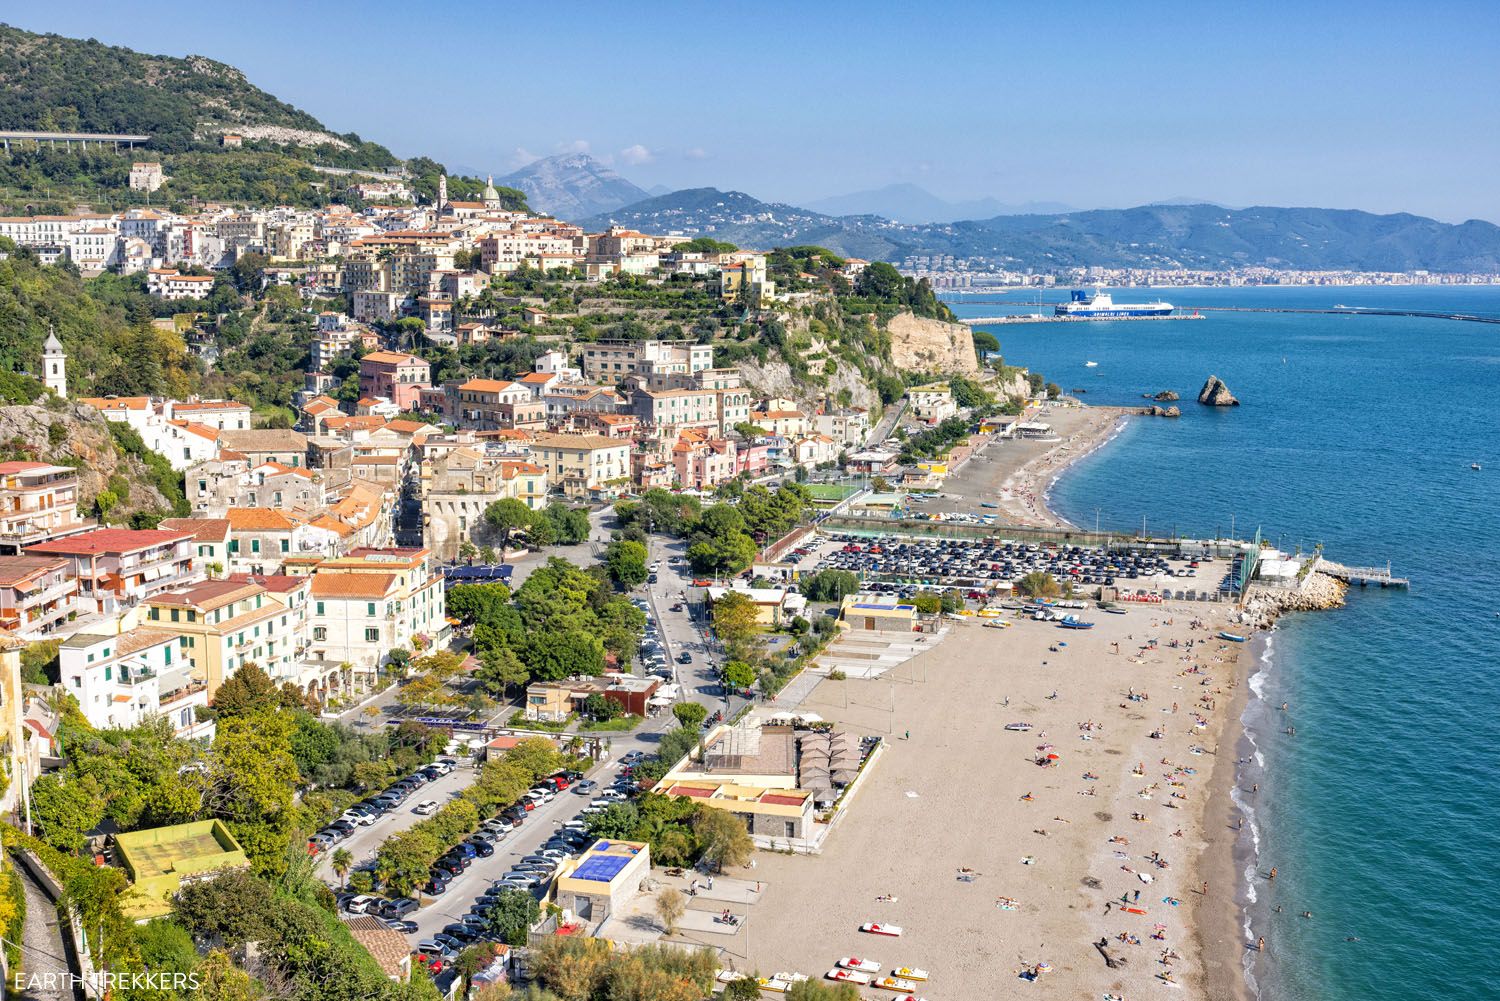 Vietri Sul Mare | Best Towns on the Amalfi Coast